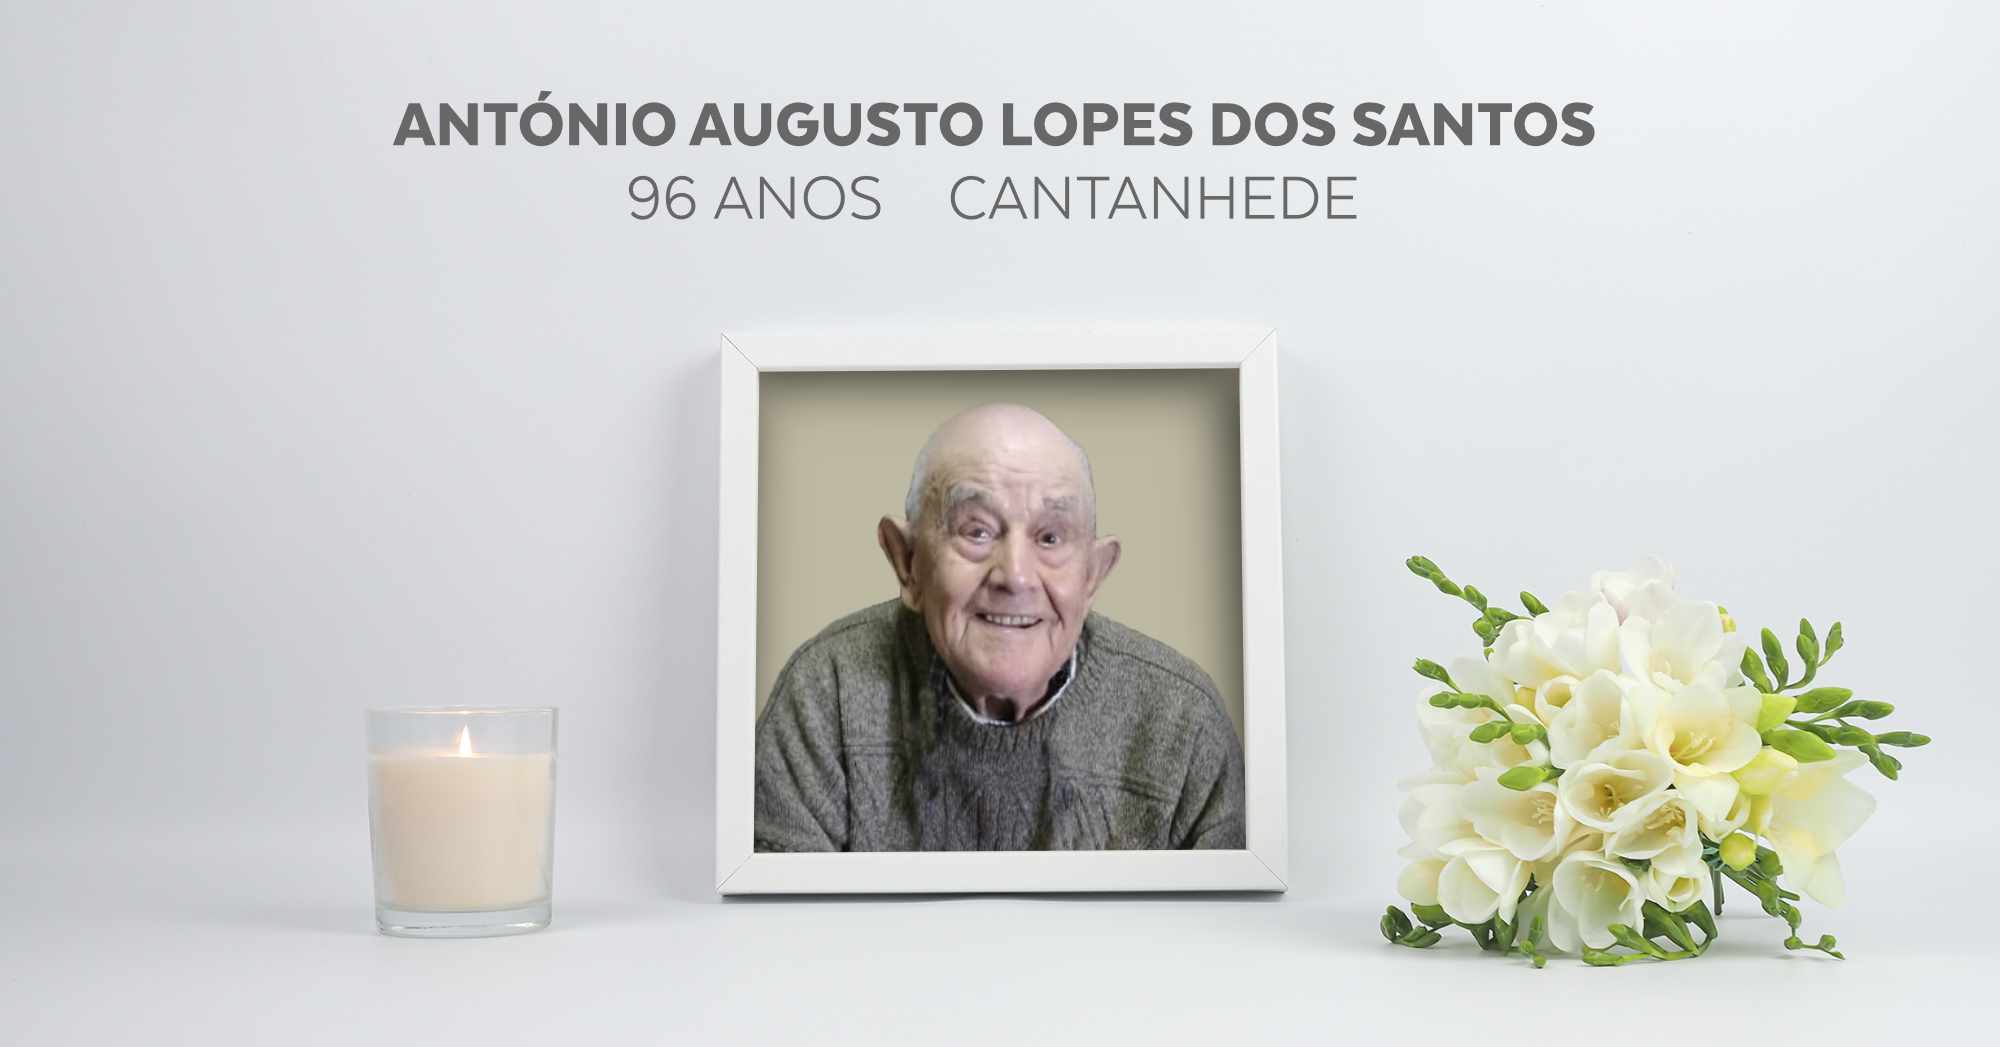 António Augusto Lopes dos Santos